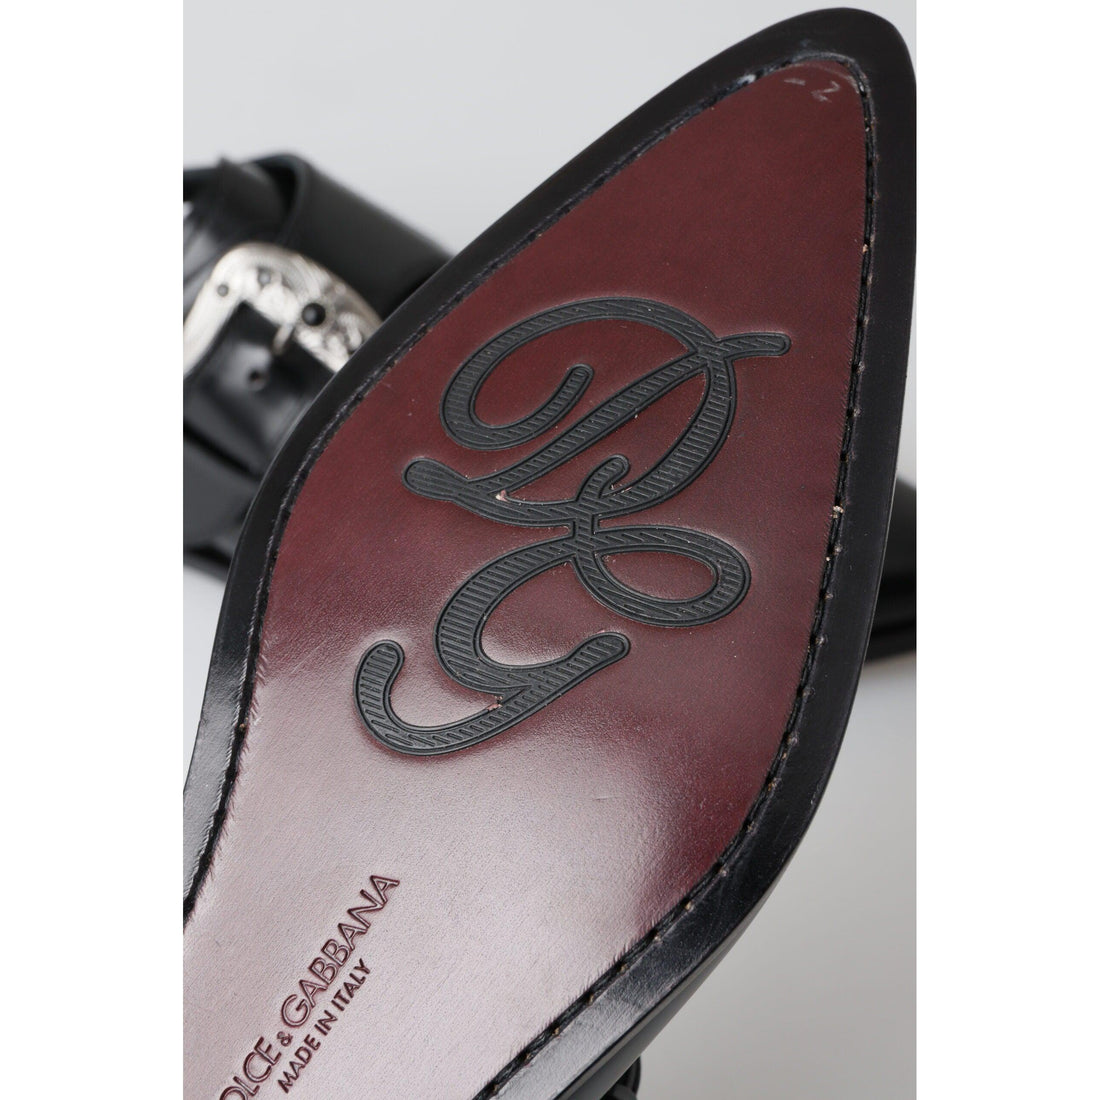 Dolce & Gabbana Elegant Black Leather Monk Strap Shoes